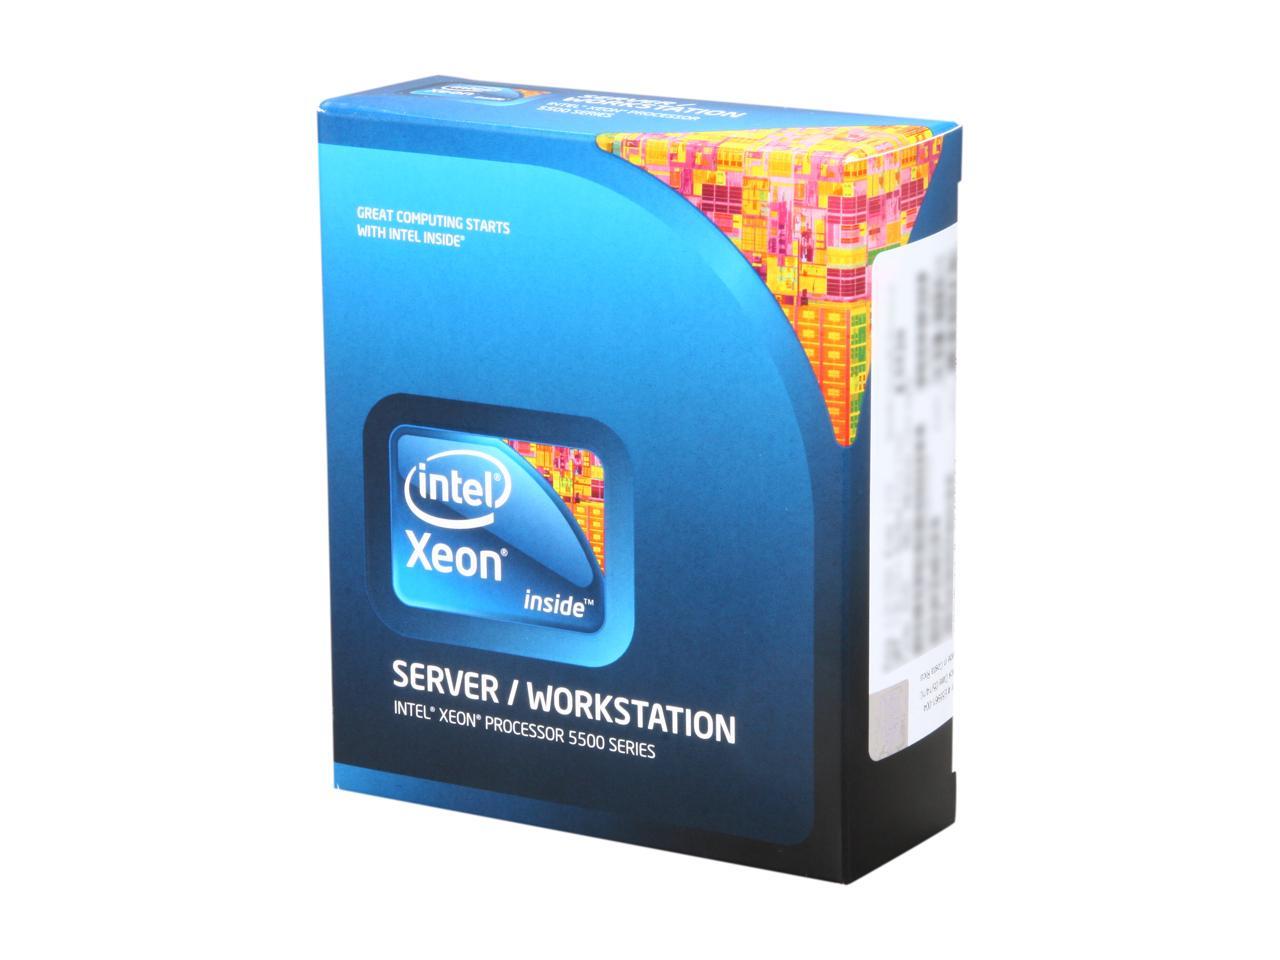 Montgomery Woning Inconsistent Used - Like New: Intel Xeon E5520 2.26 GHz LGA 1366 80W BX80602E5520 Server  Processor - Newegg.com